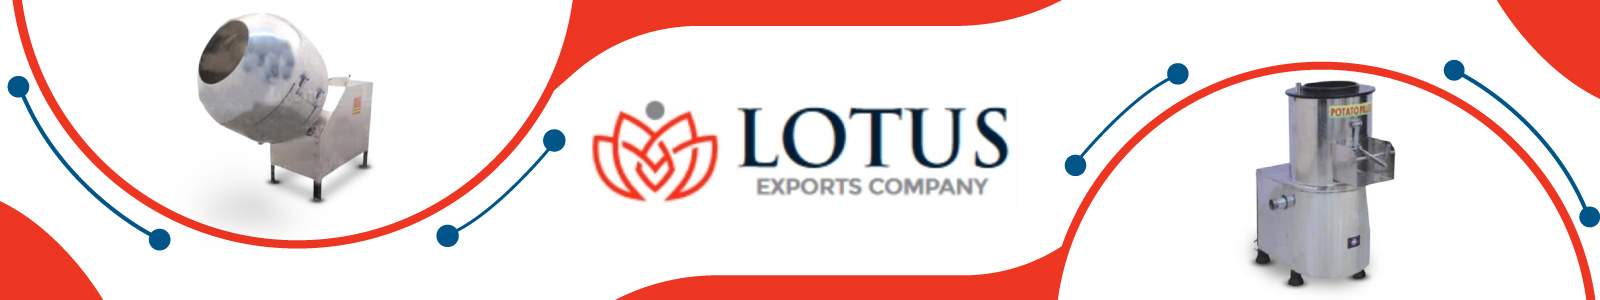 Lotus Exports Company